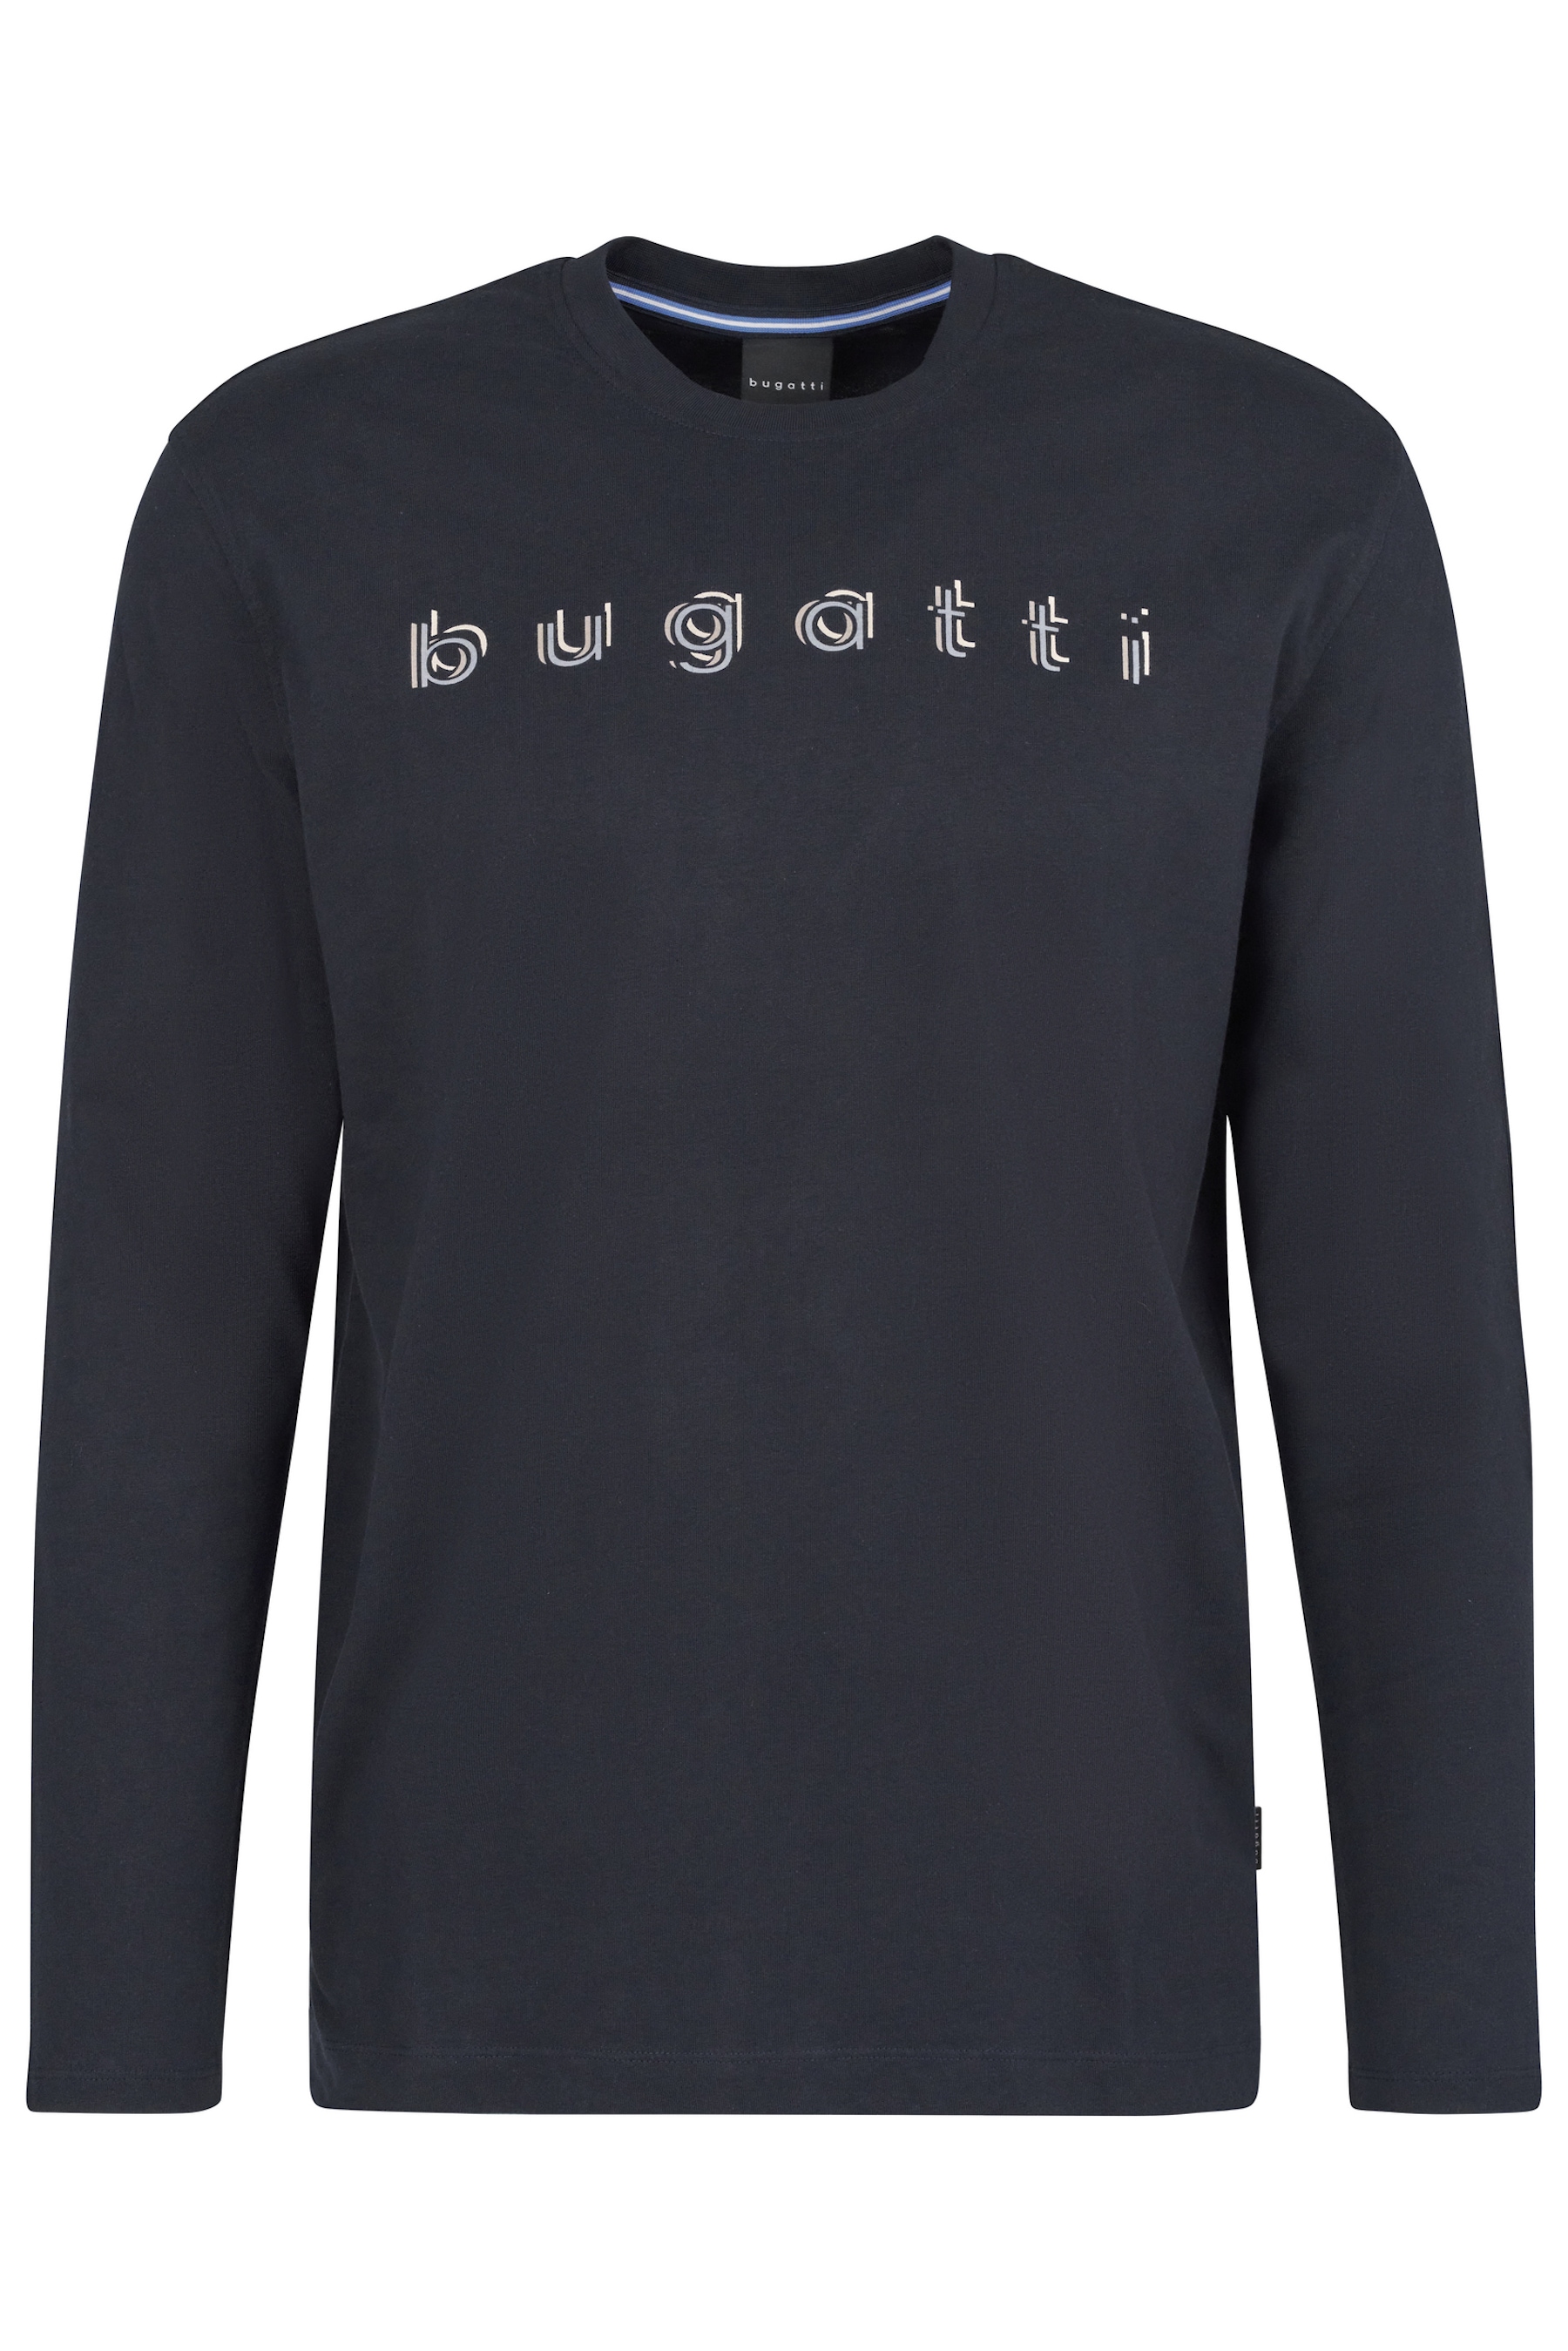 bugatti Longsweatshirt von Bugatti